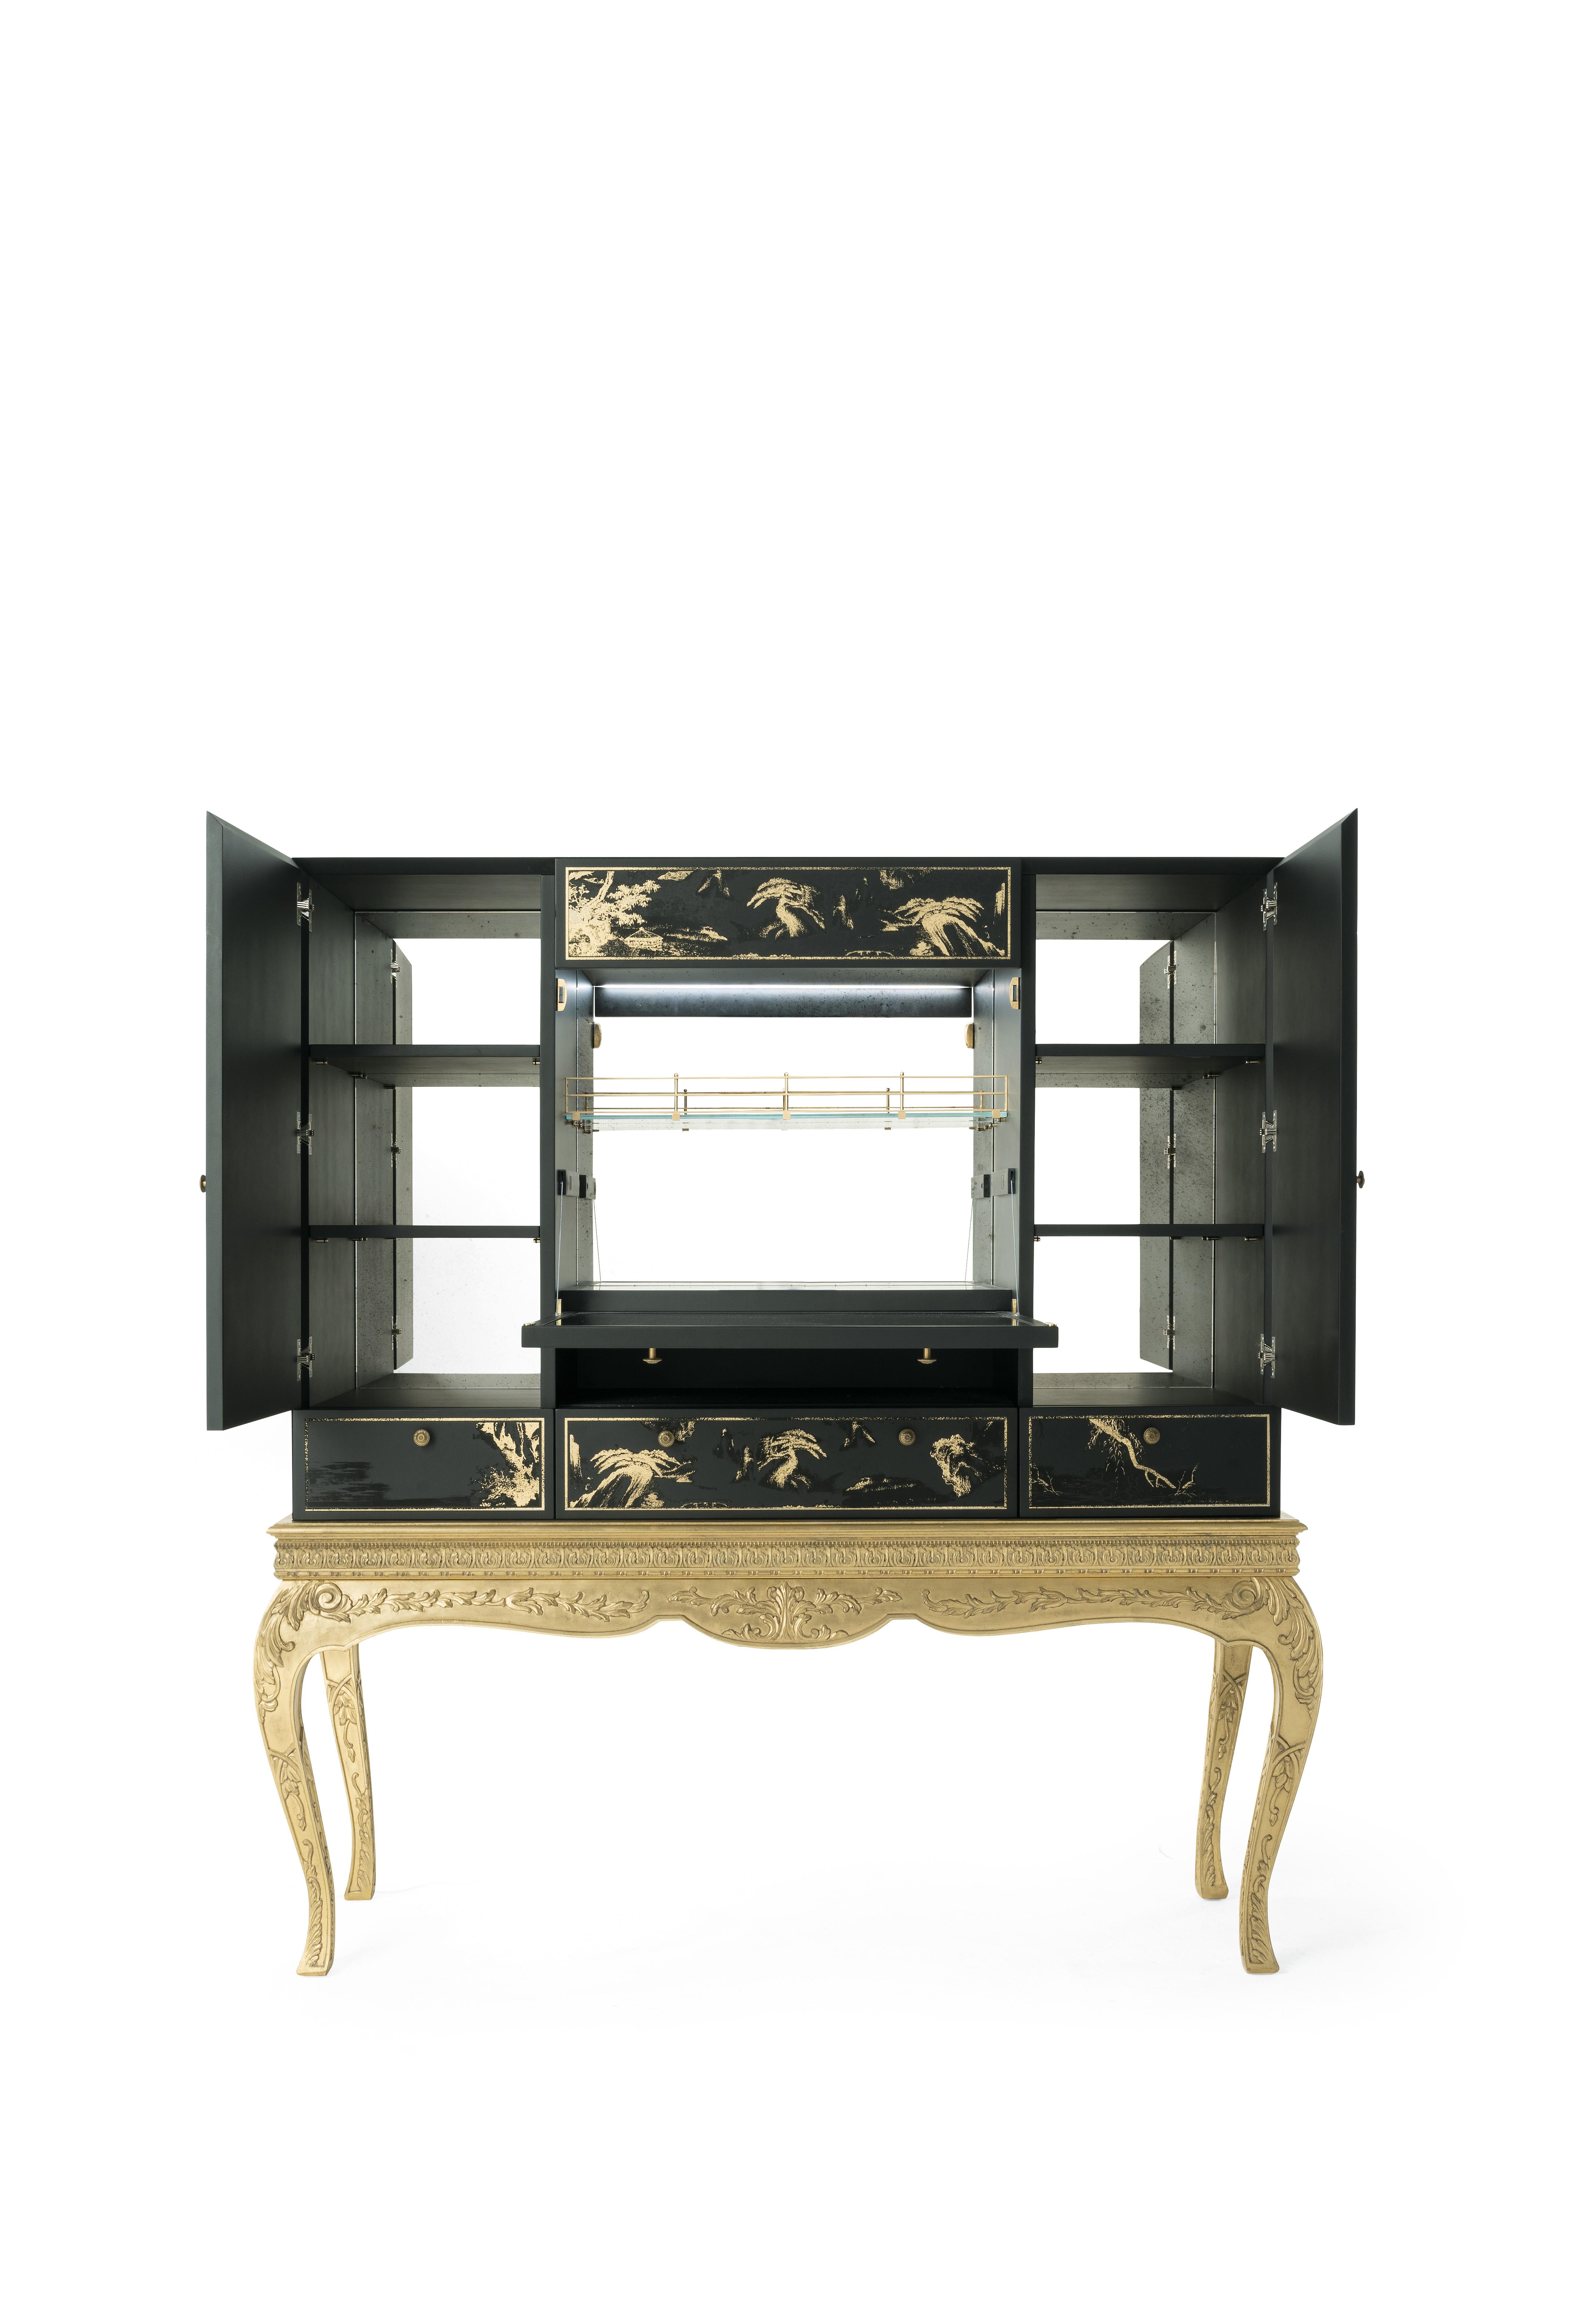 21st Century Brocart Bar Cabinet with Gold Leaf Laser Engraved Lace Decoration For Sale 1